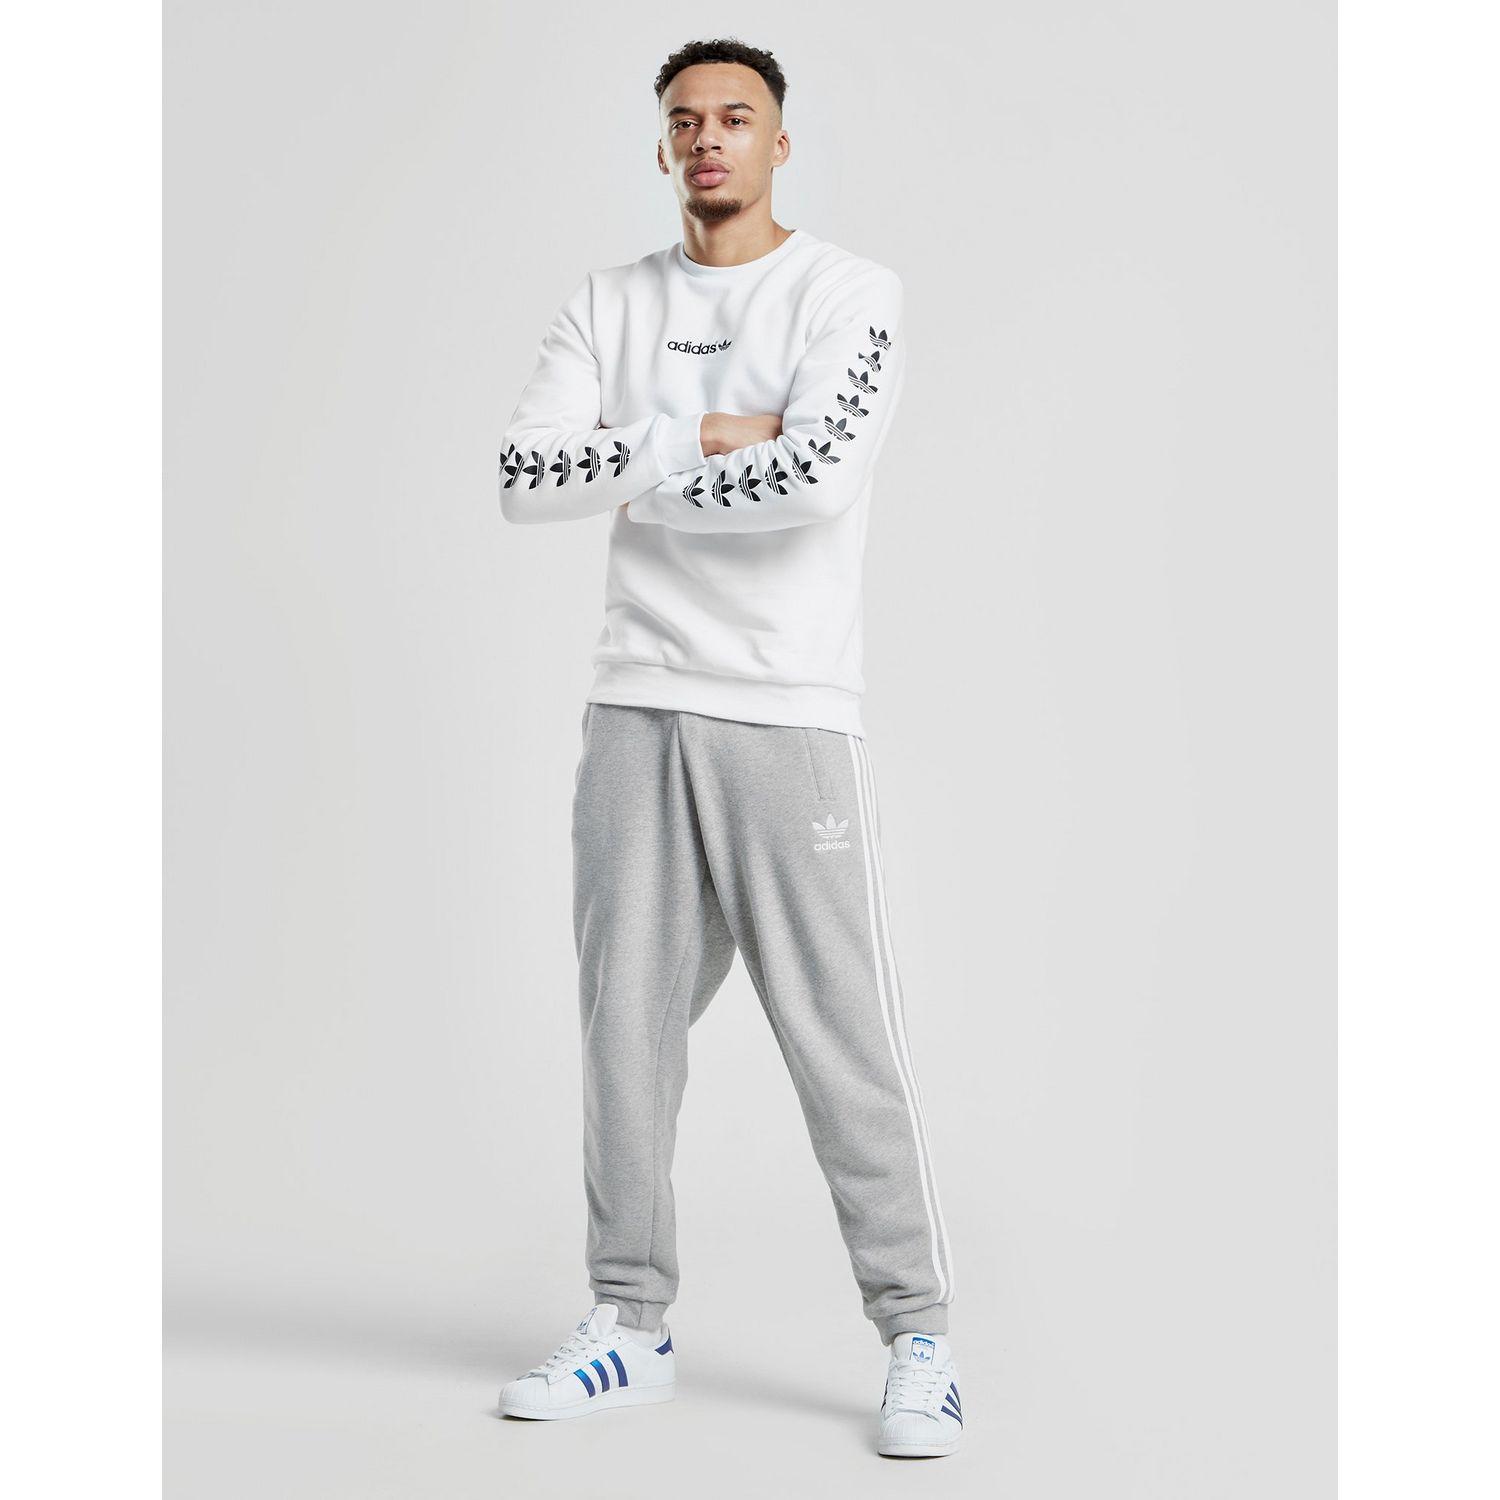 adidas Originals Cotton Tape Qqr Crew Sweatshirt in White/Black (White) for  Men - Lyst